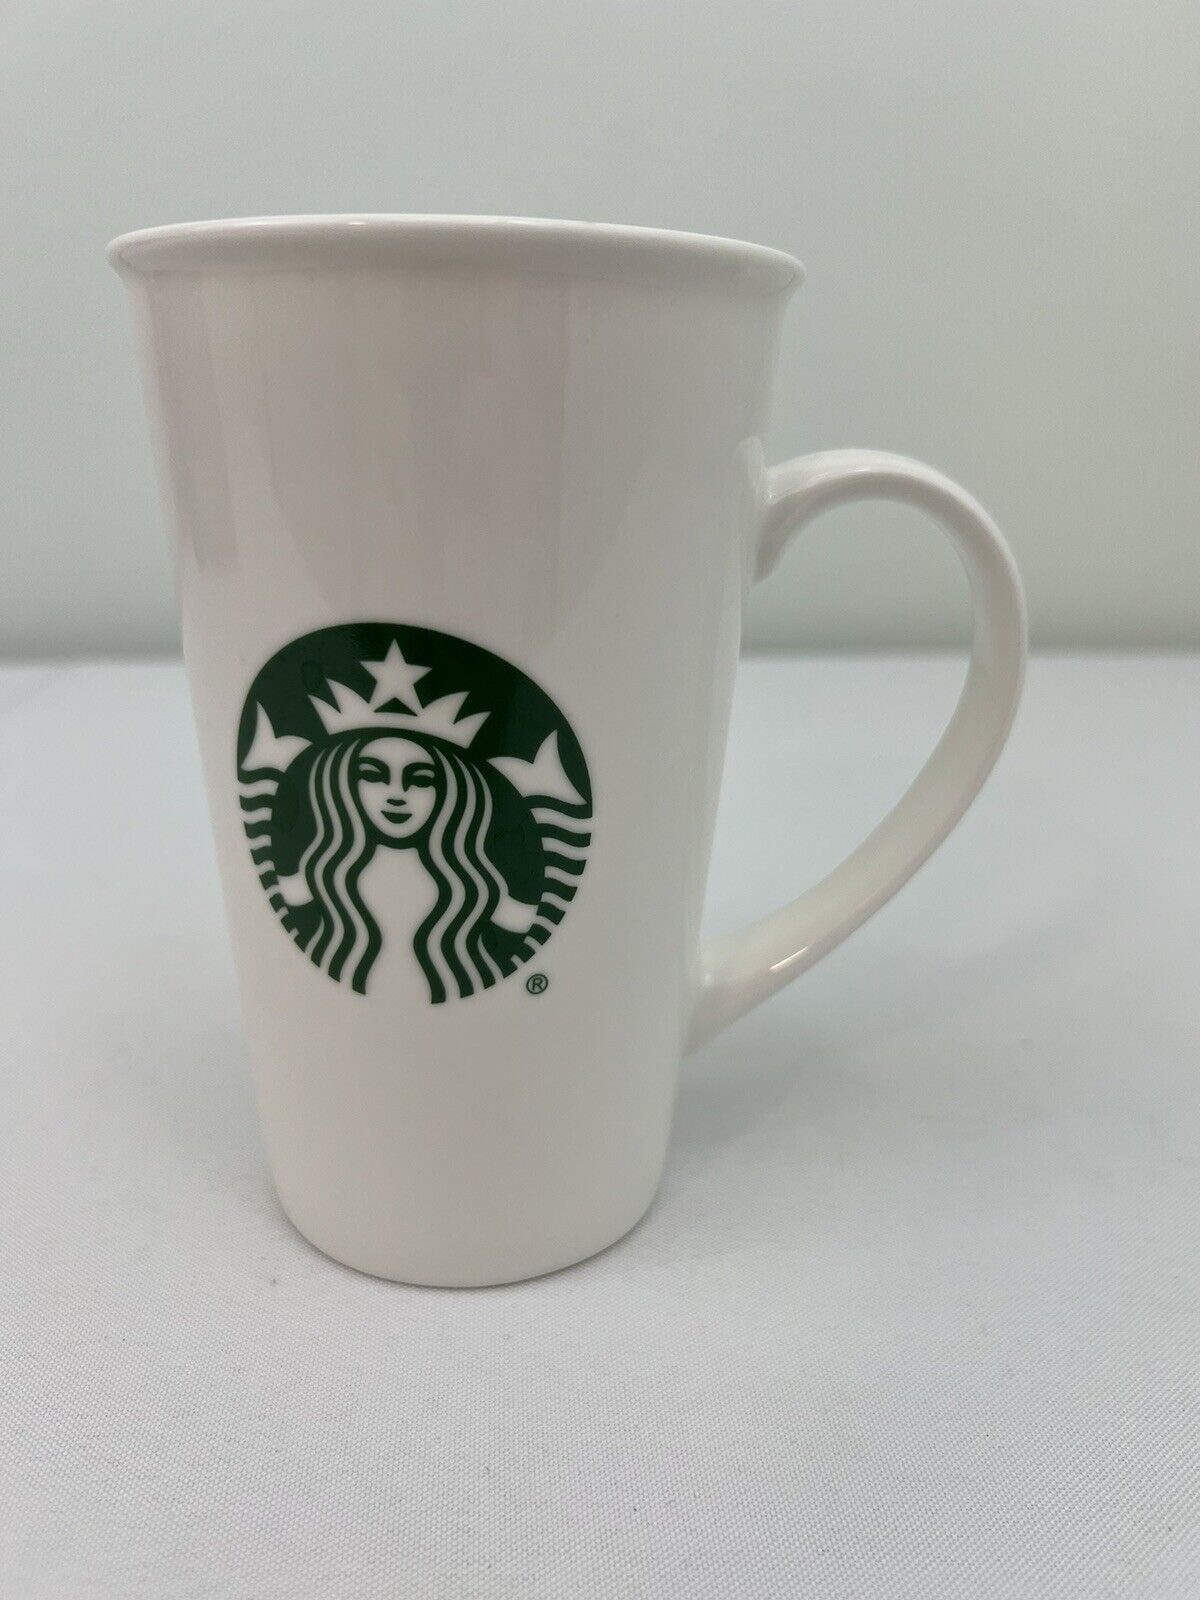 Starbucks 2015 Tall Coffee Cup Mug 18oz Green Siren Logo Ceramic White